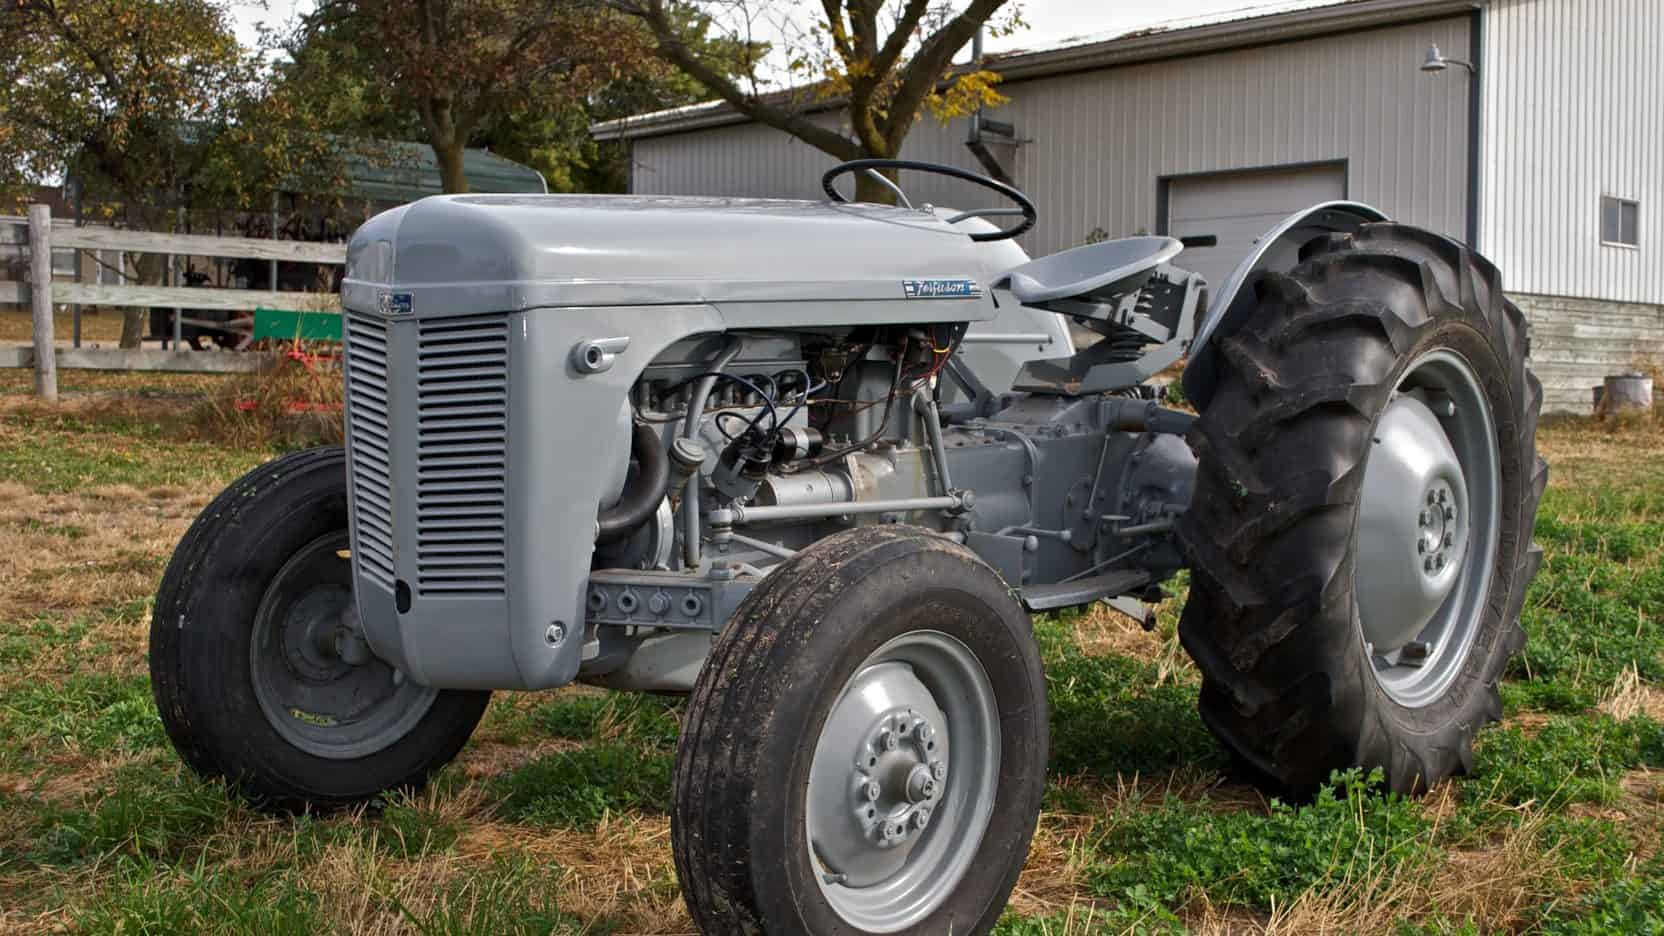 A Ferguson tractor